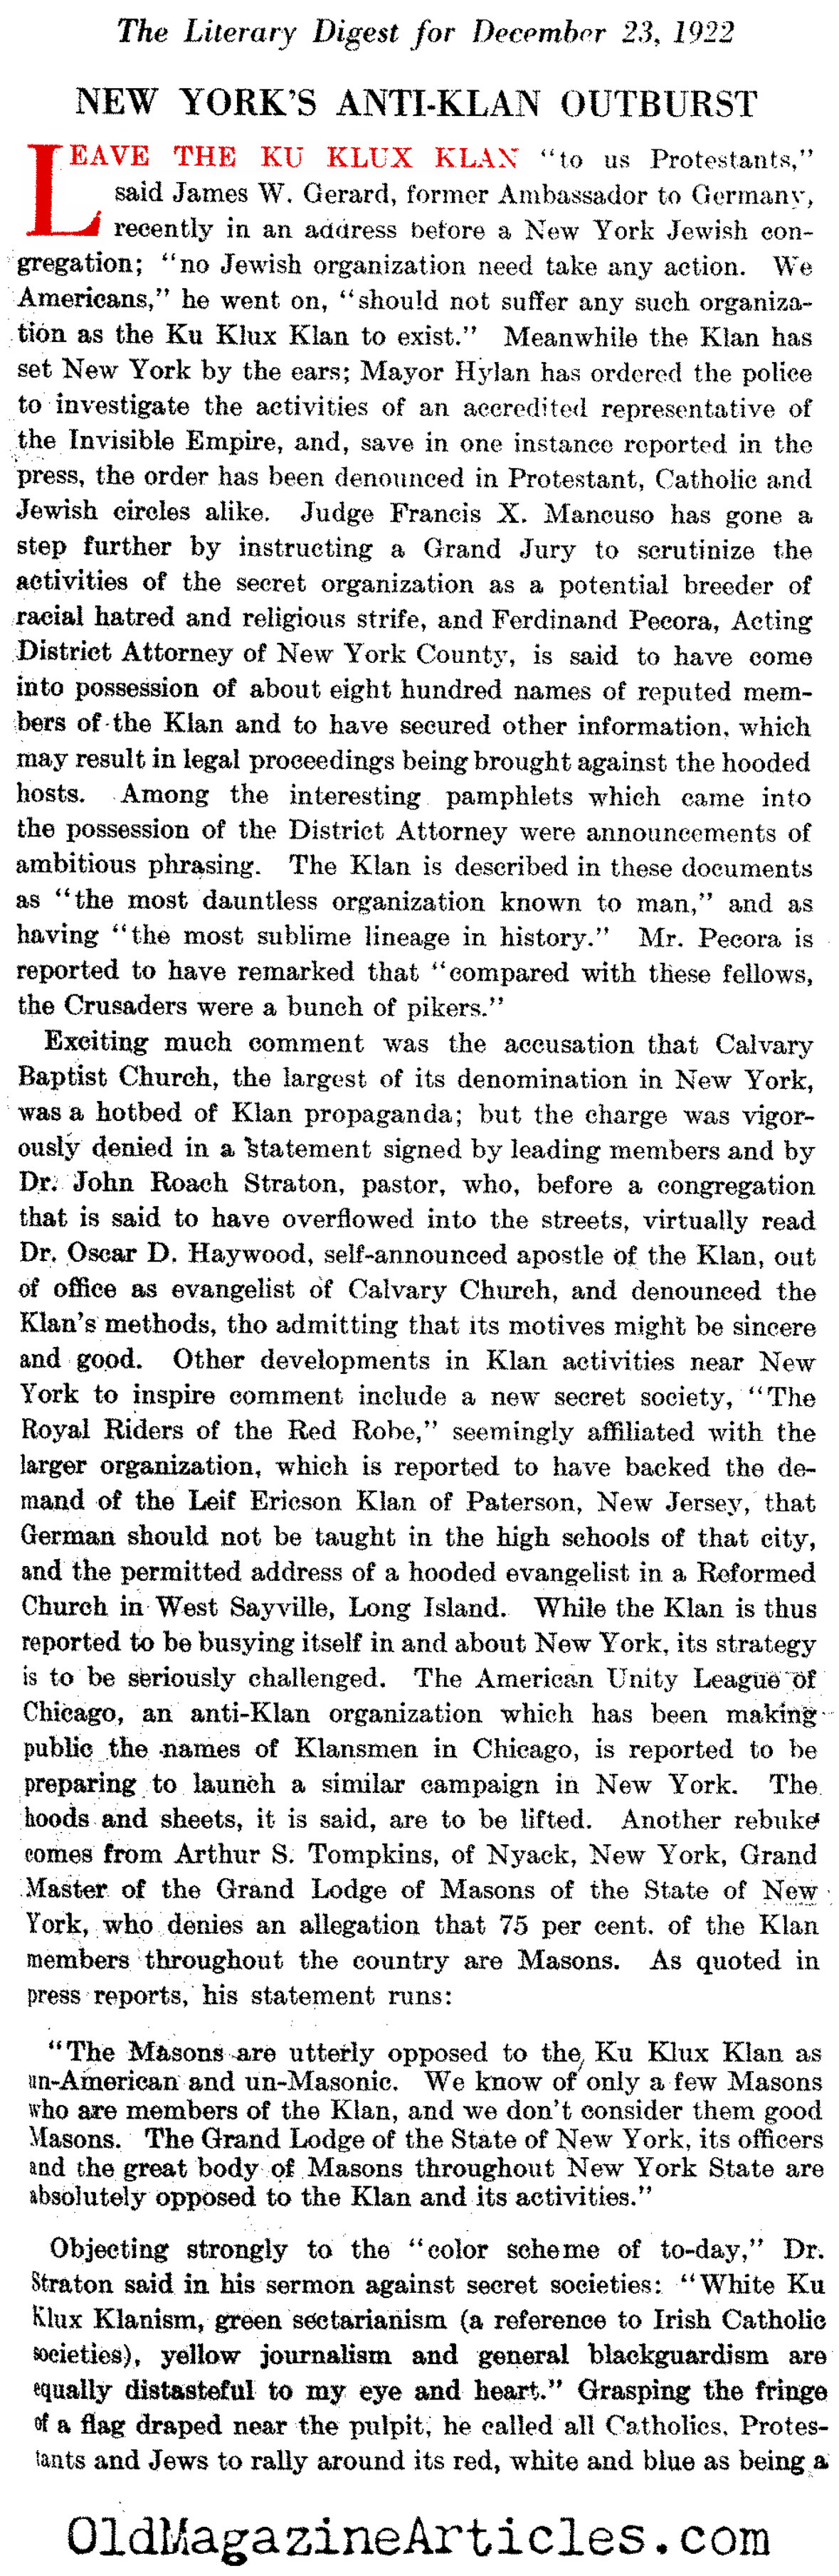 The Klan in New York City (Literary Digest, 1922)